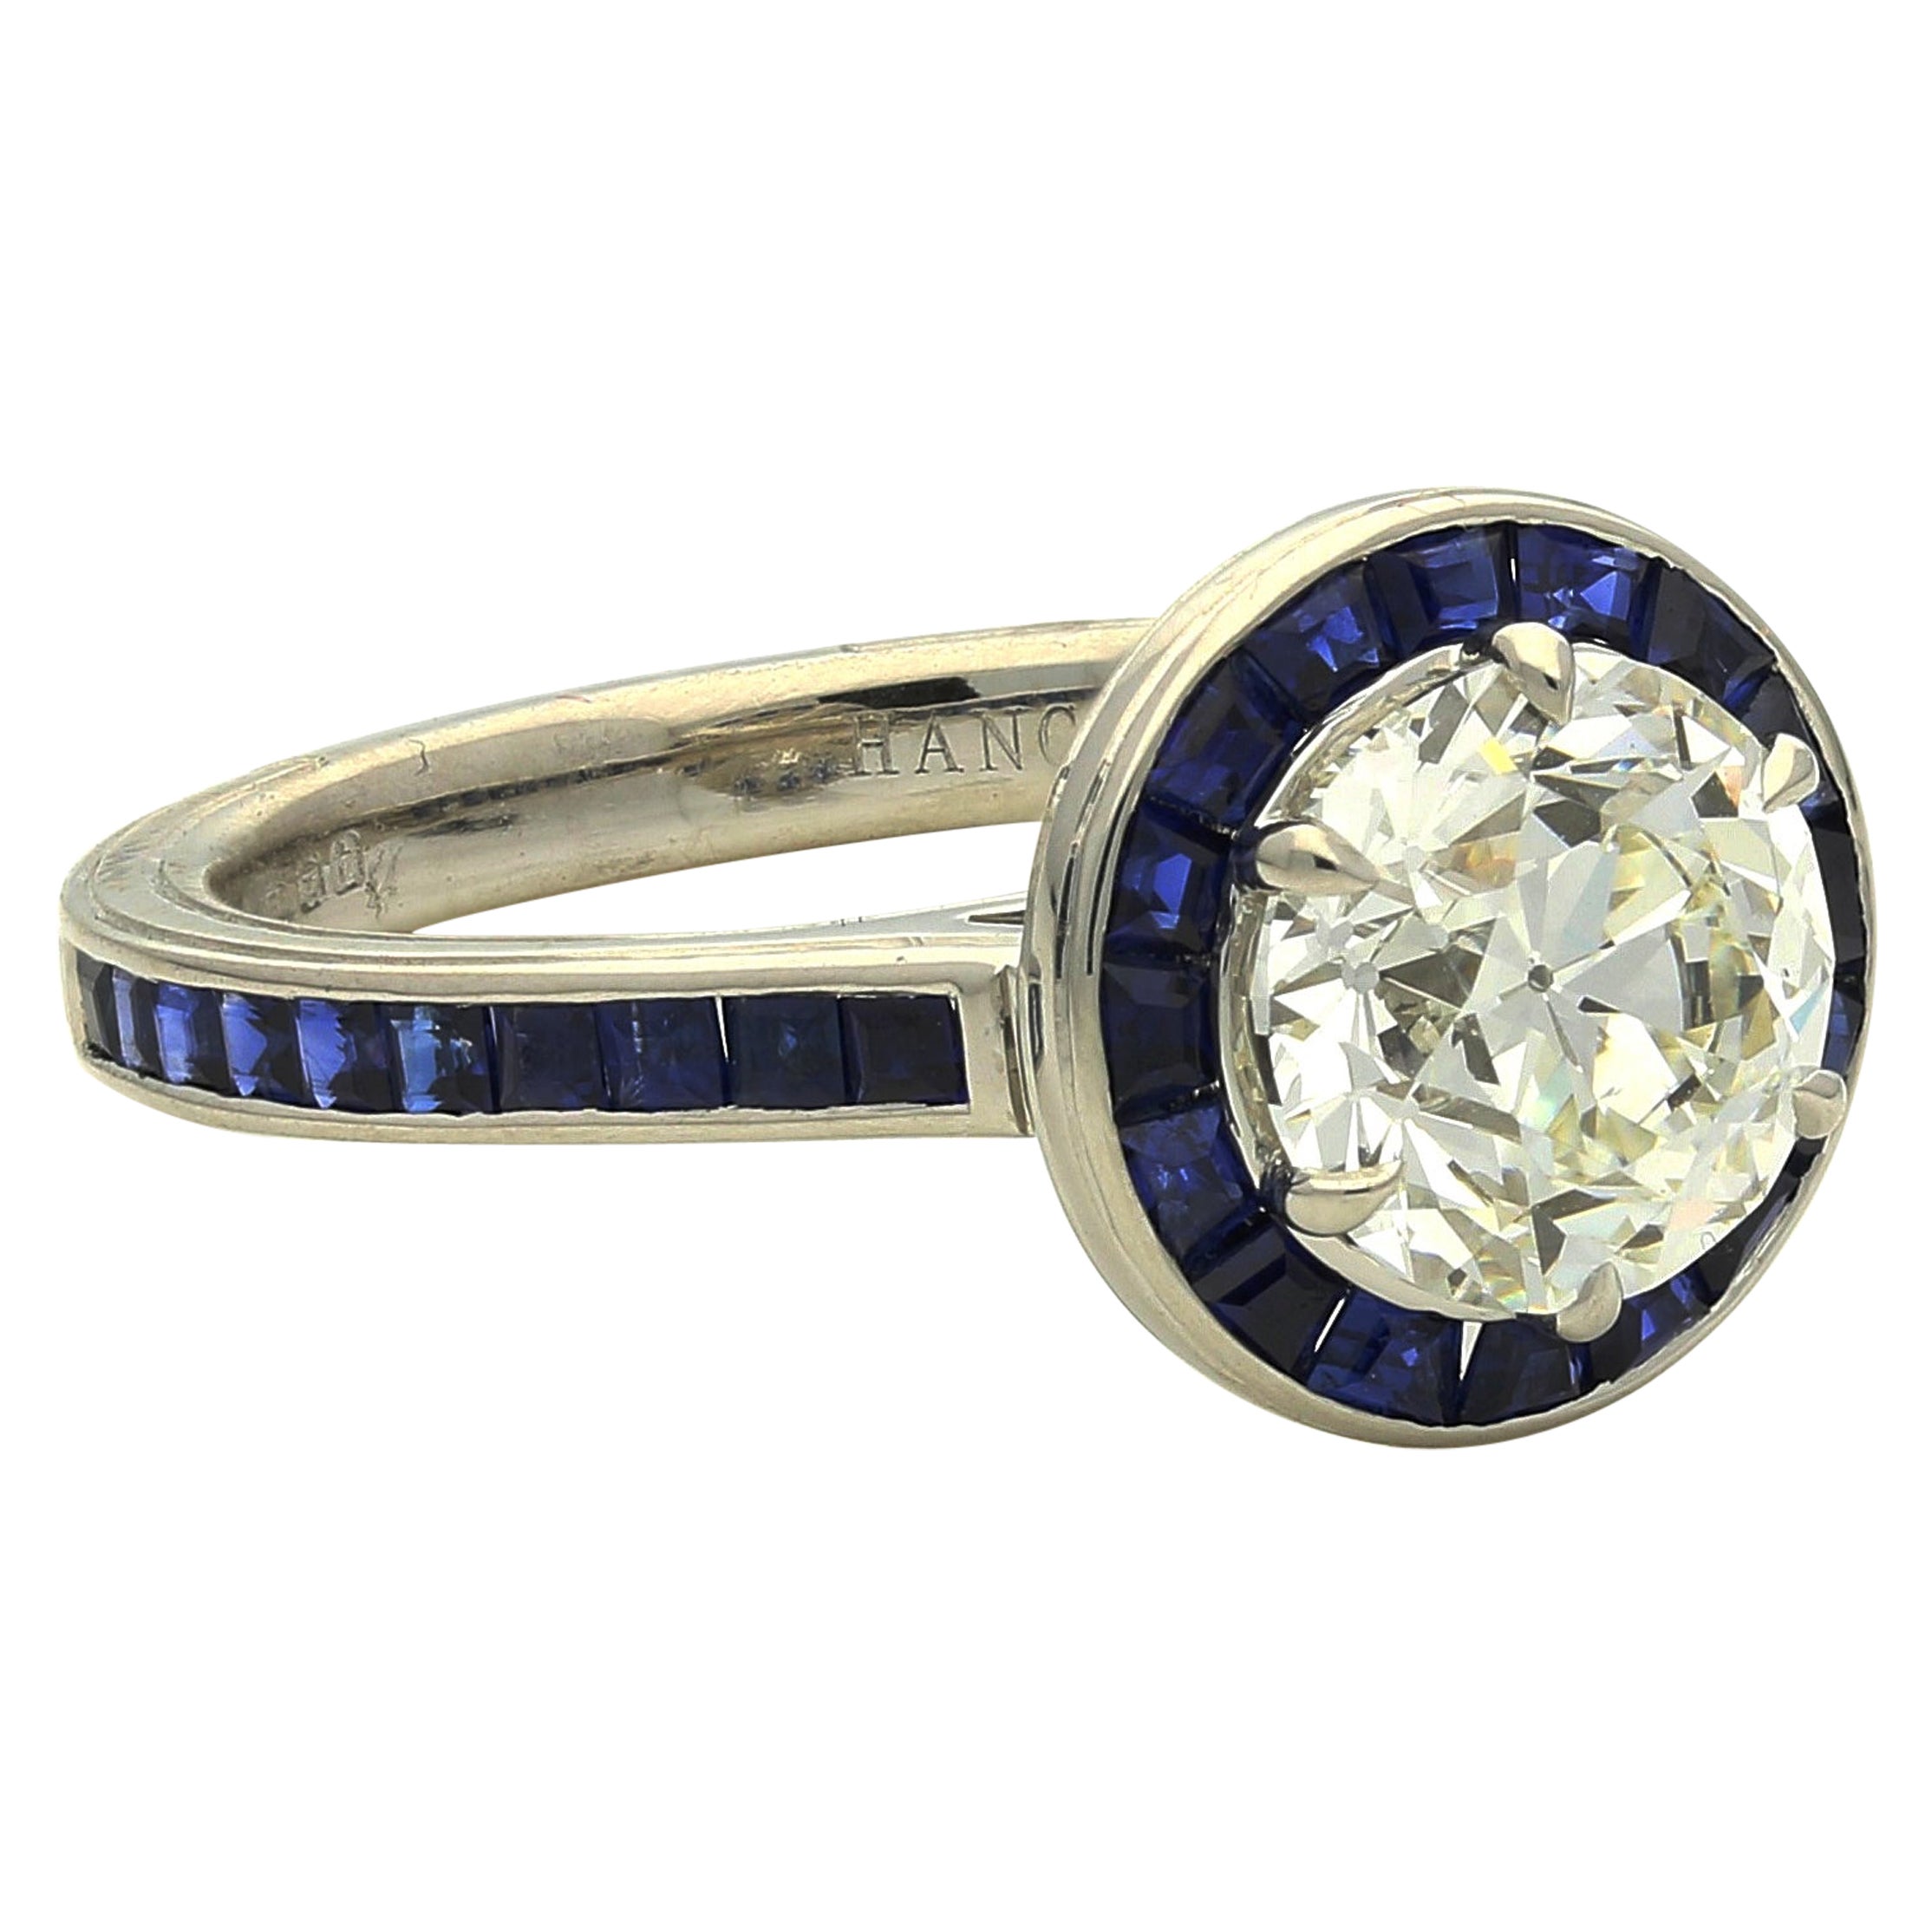 Hancocks Contemporary 2.02ct Old Cut Diamond Calibre Cut Sapphire Halo Ring